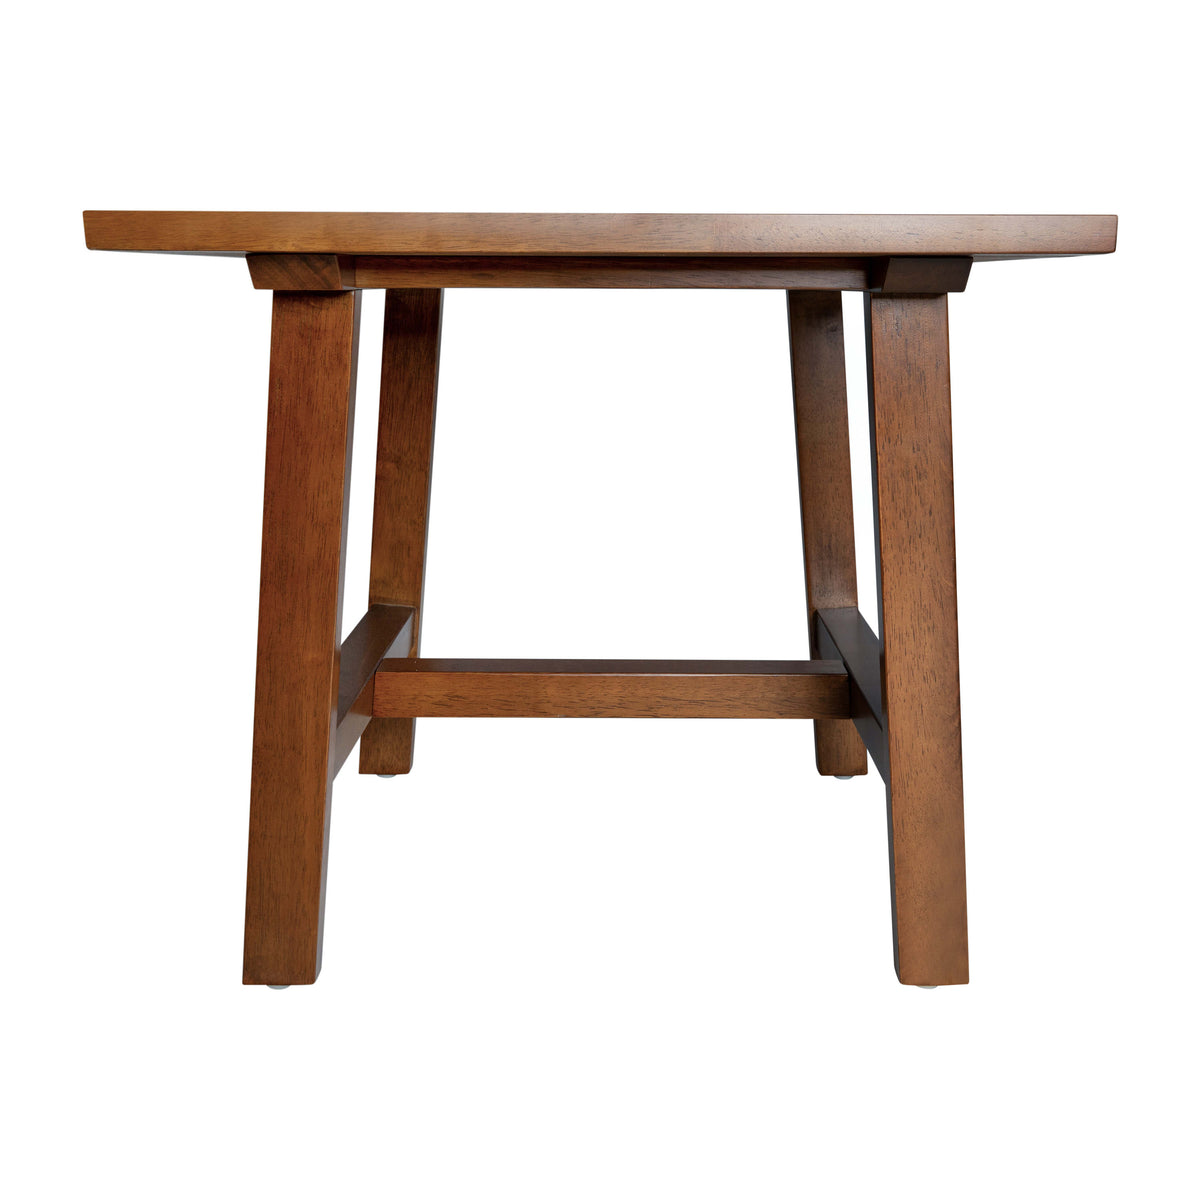 Walnut |#| Solid Wood Farmhouse Trestle Style End Table in Walnut